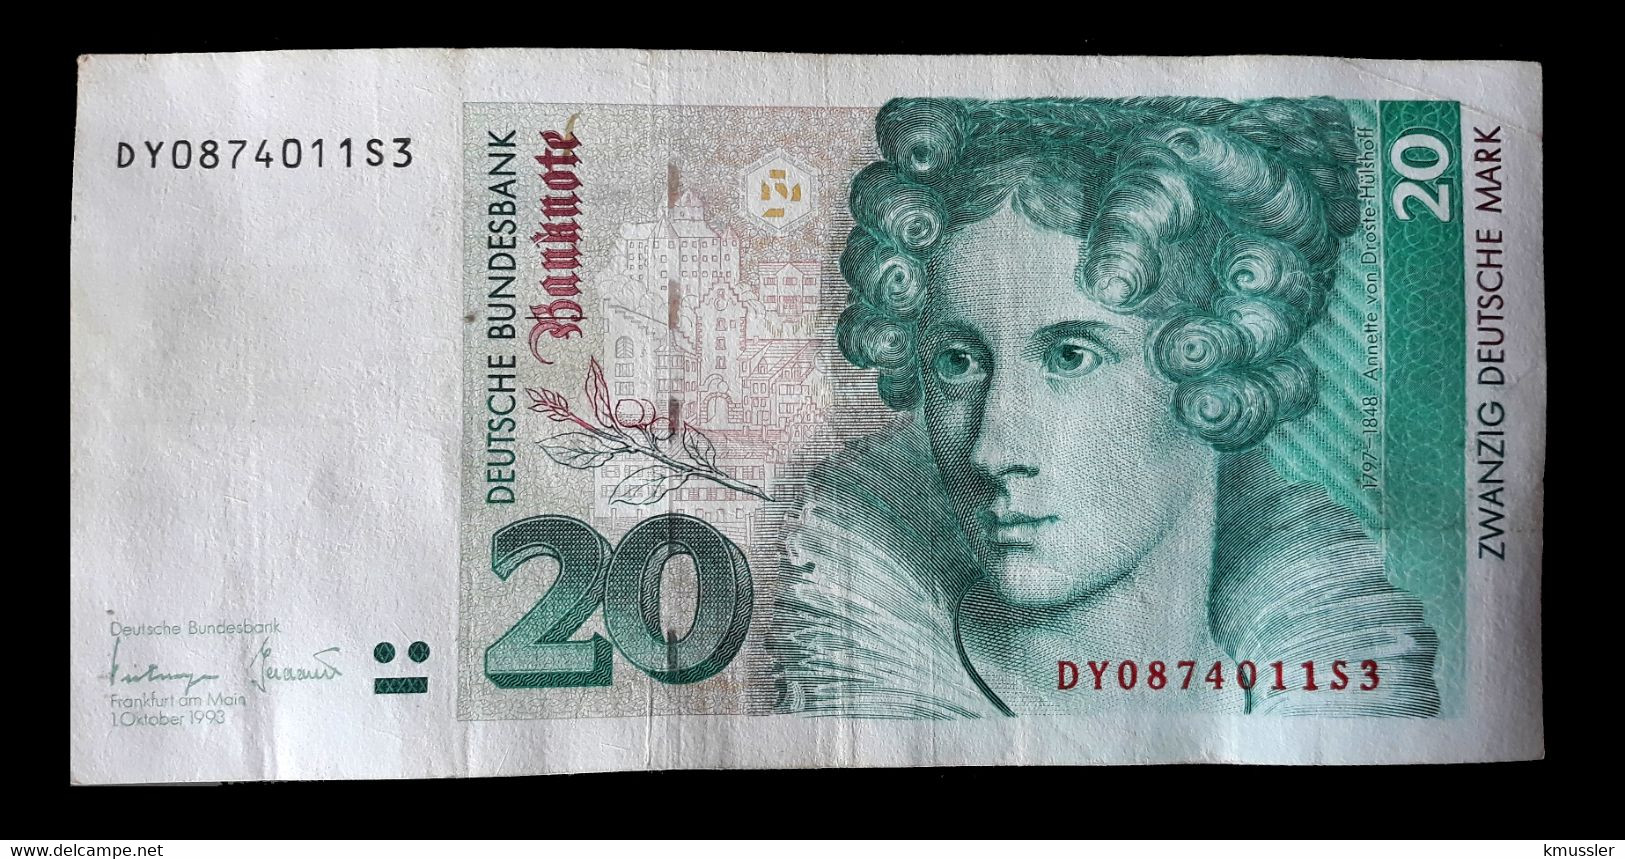 # # # Banknote Germany (Bundesrepublik) 20 Mark 1993 # # # - 20 Deutsche Mark